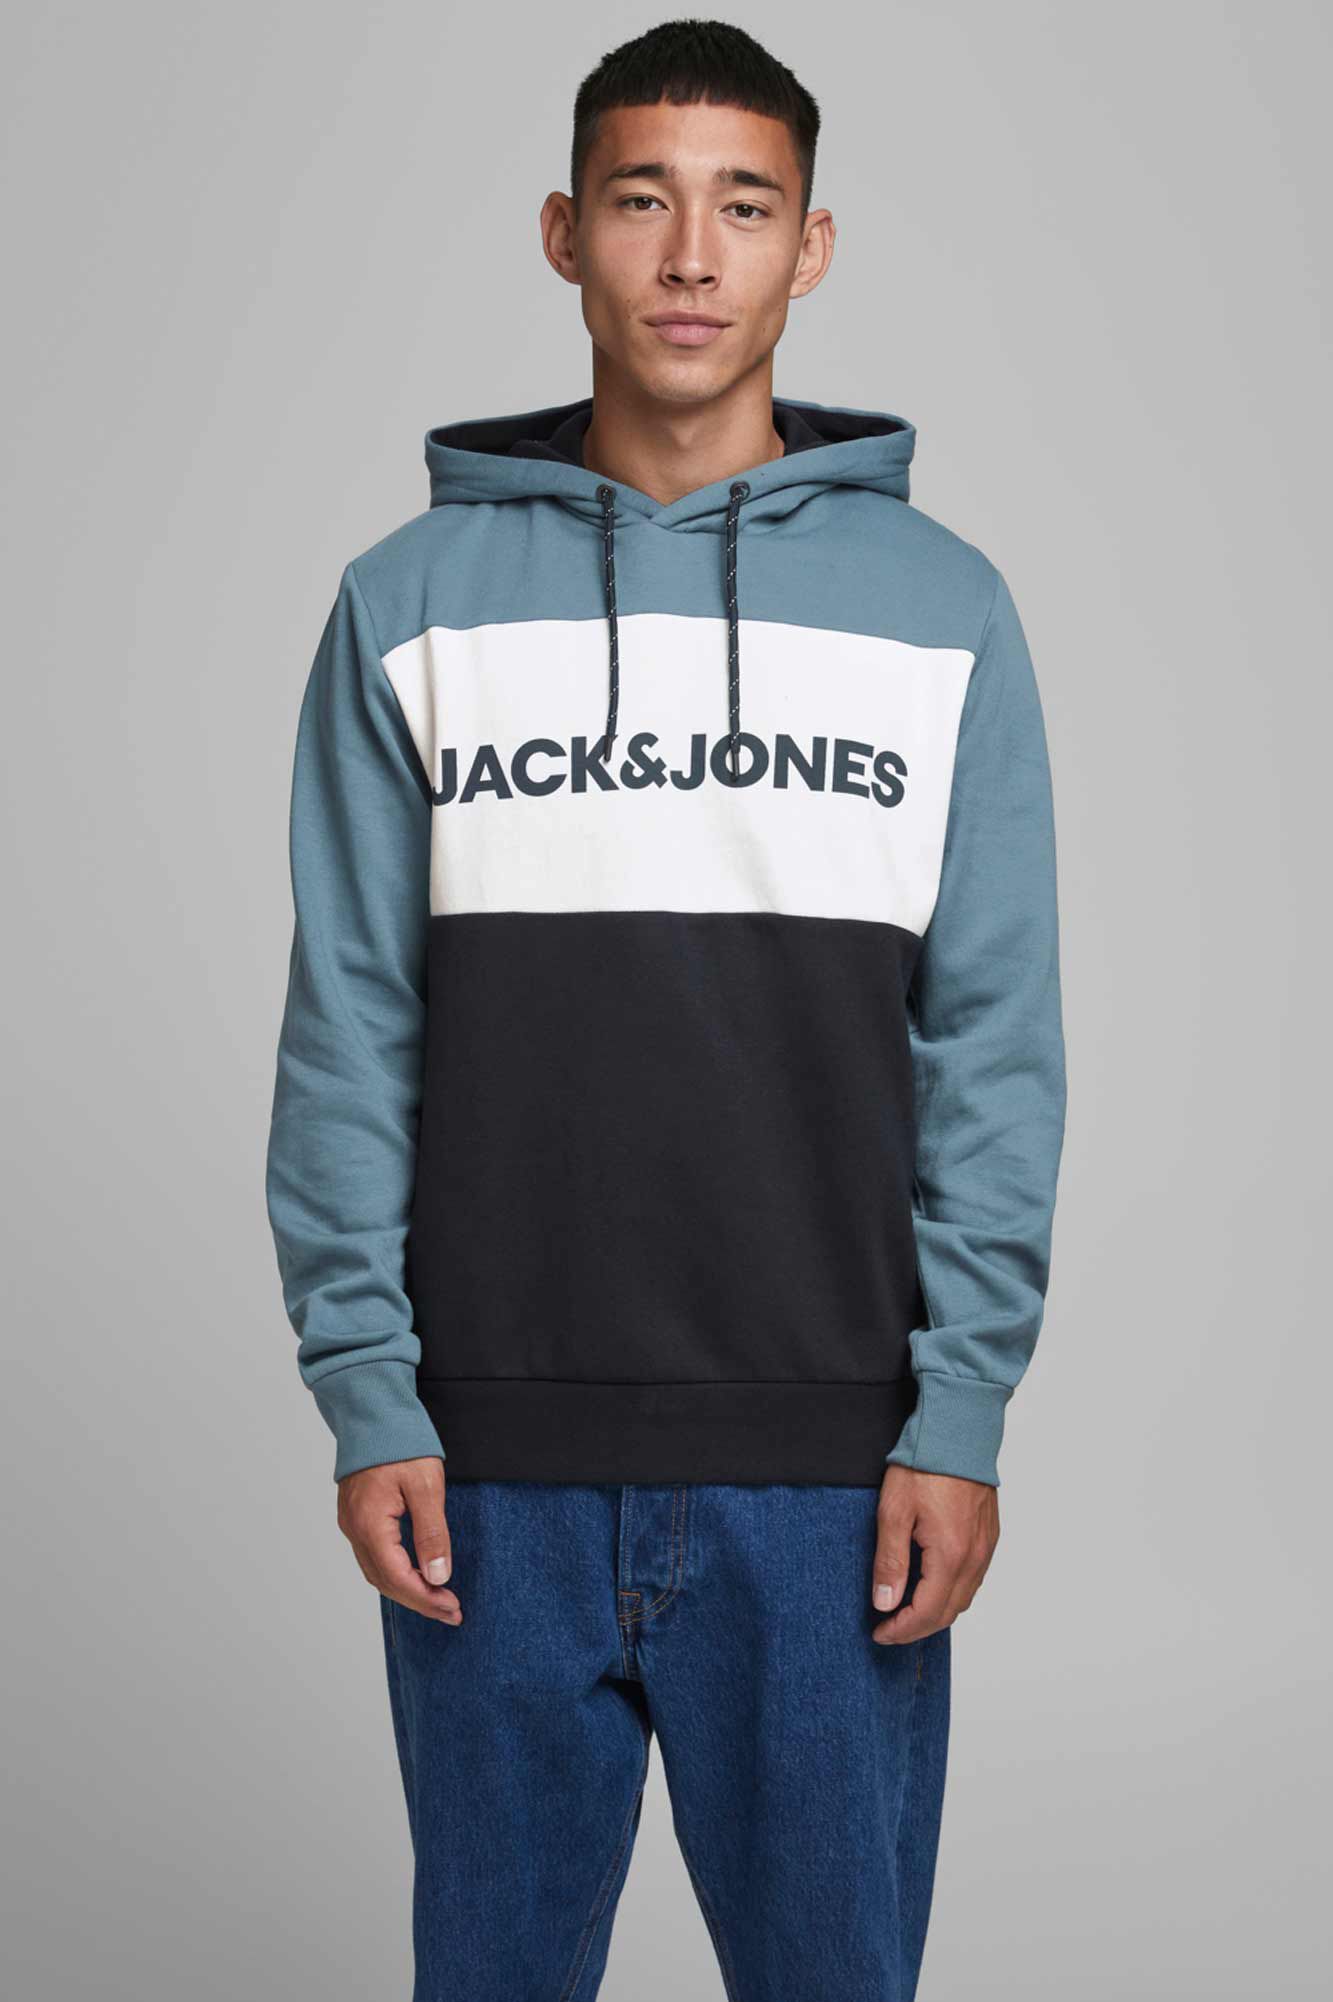 MEN FASHION Jumpers & Sweatshirts Print discount 96% Springfield jumper Gray/Blue M 